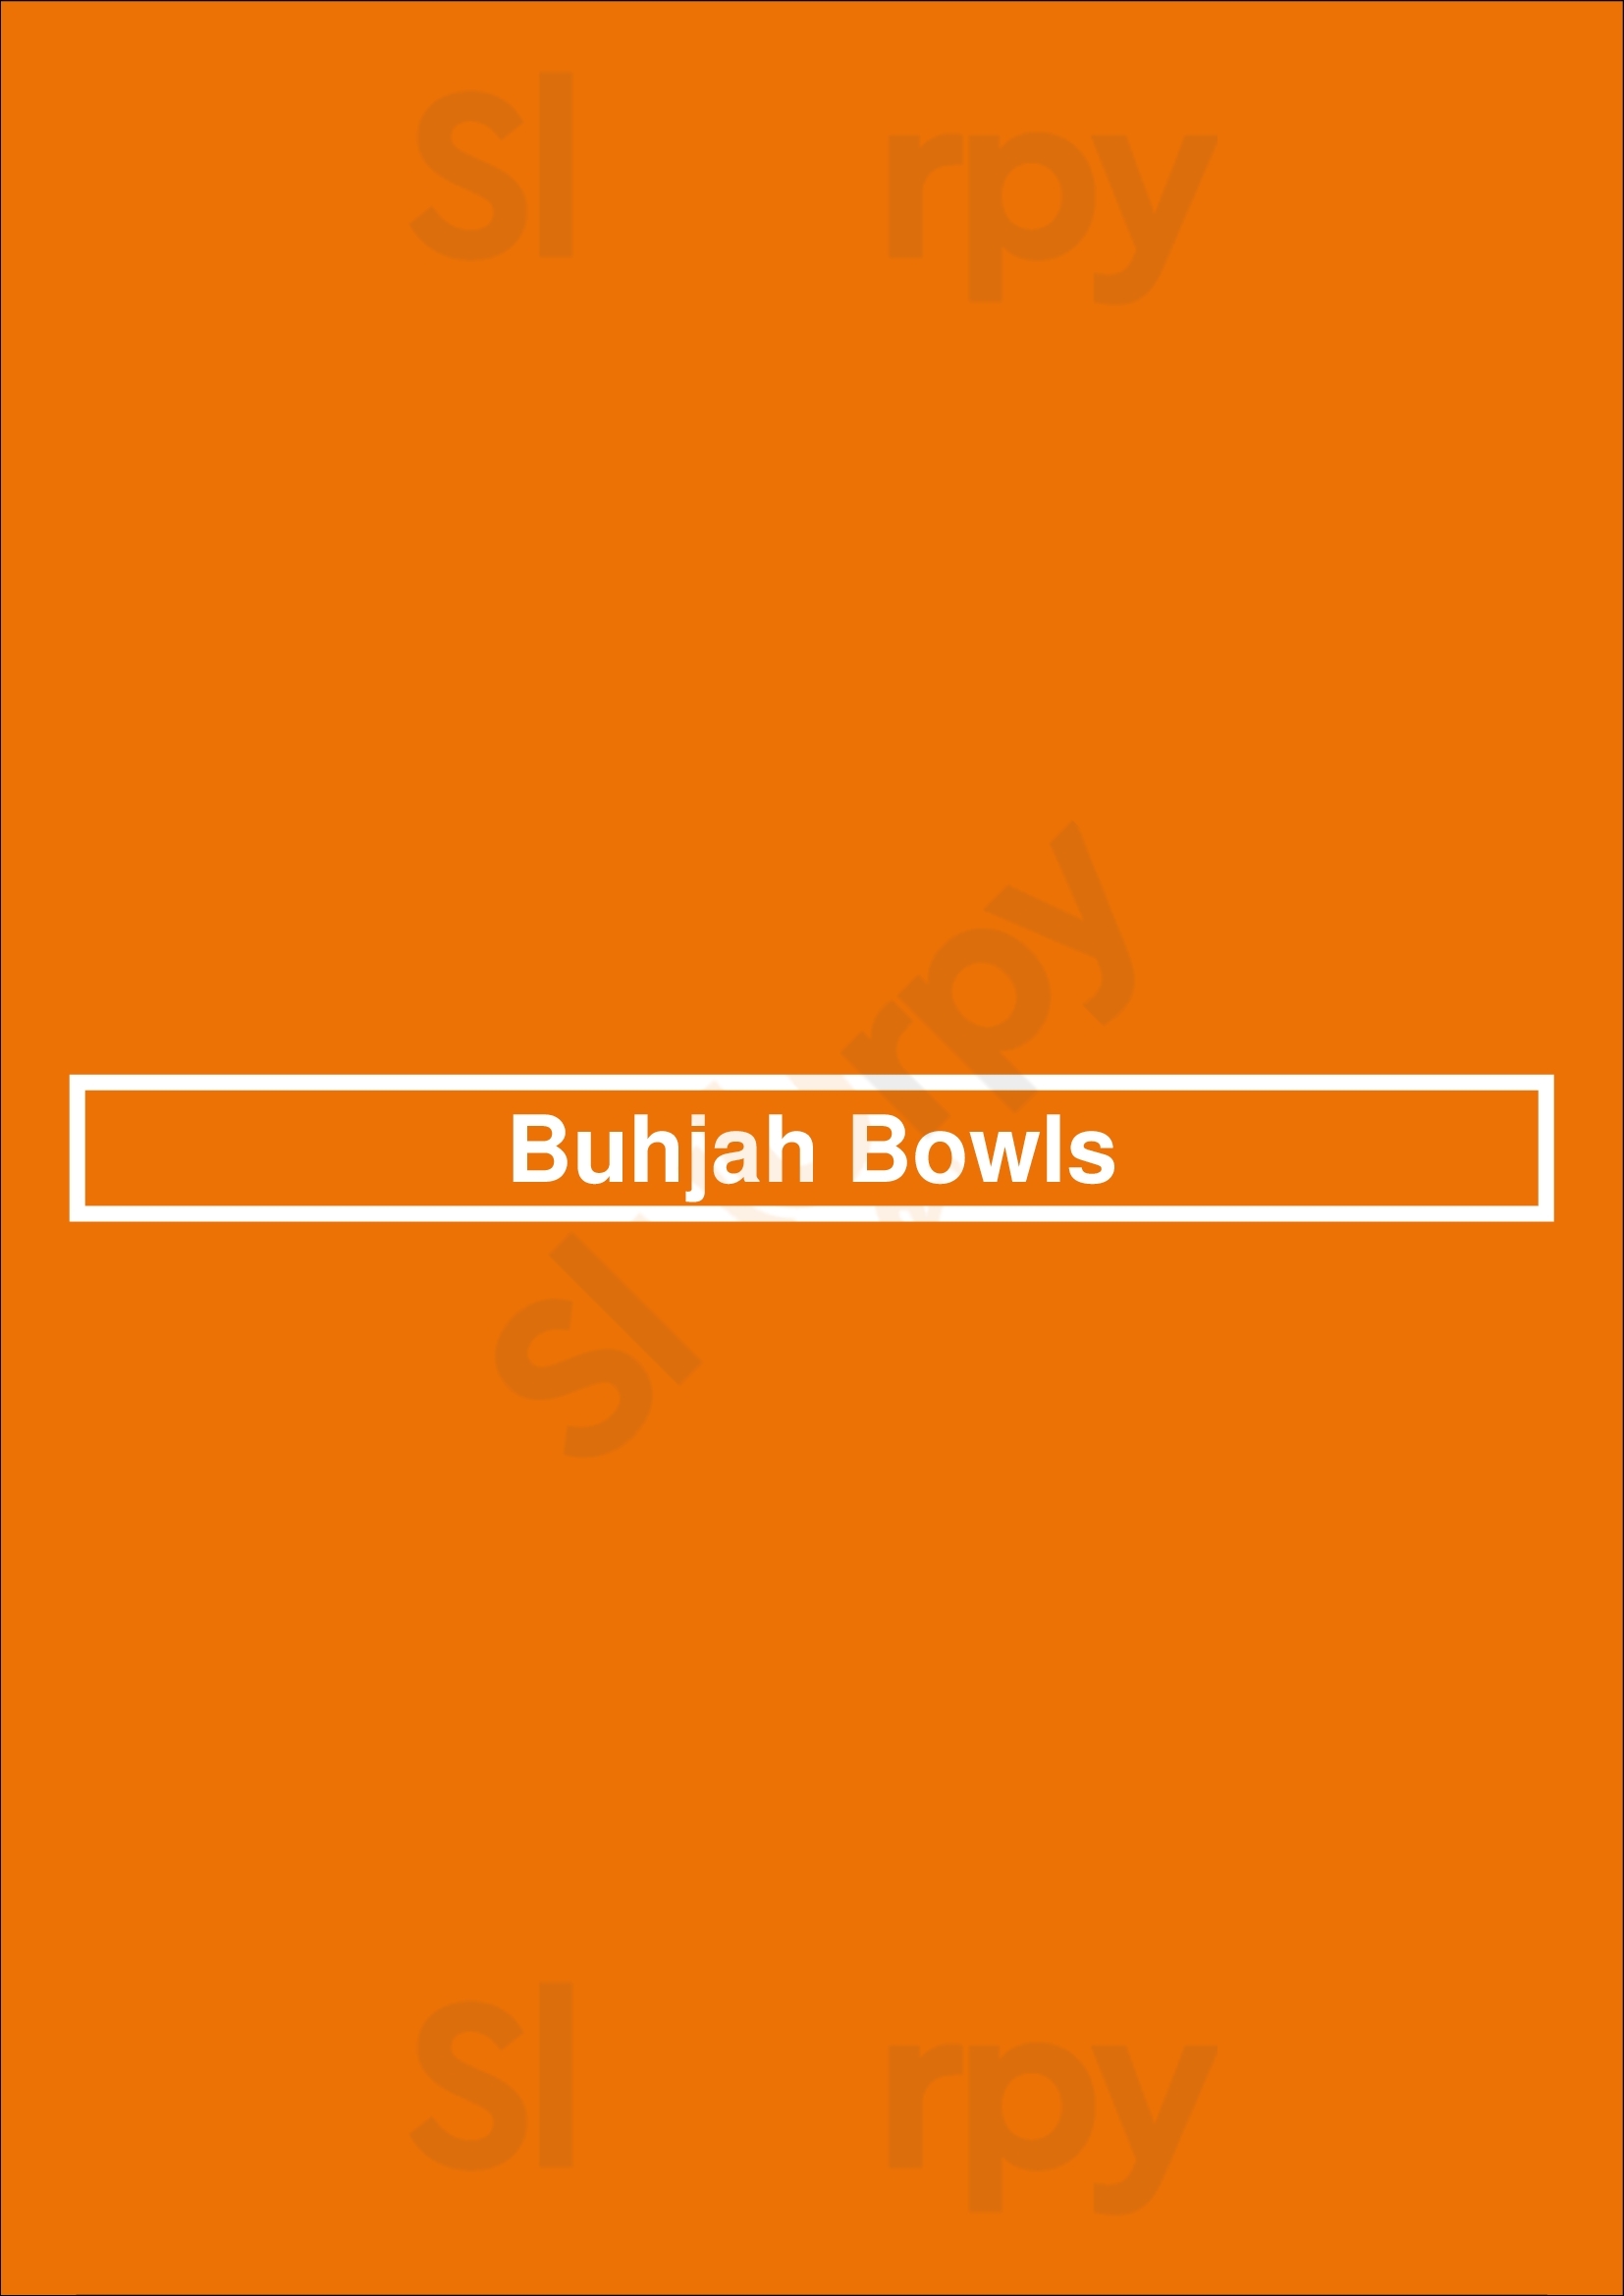 Buhjah Bowls Hamburg Menu - 1